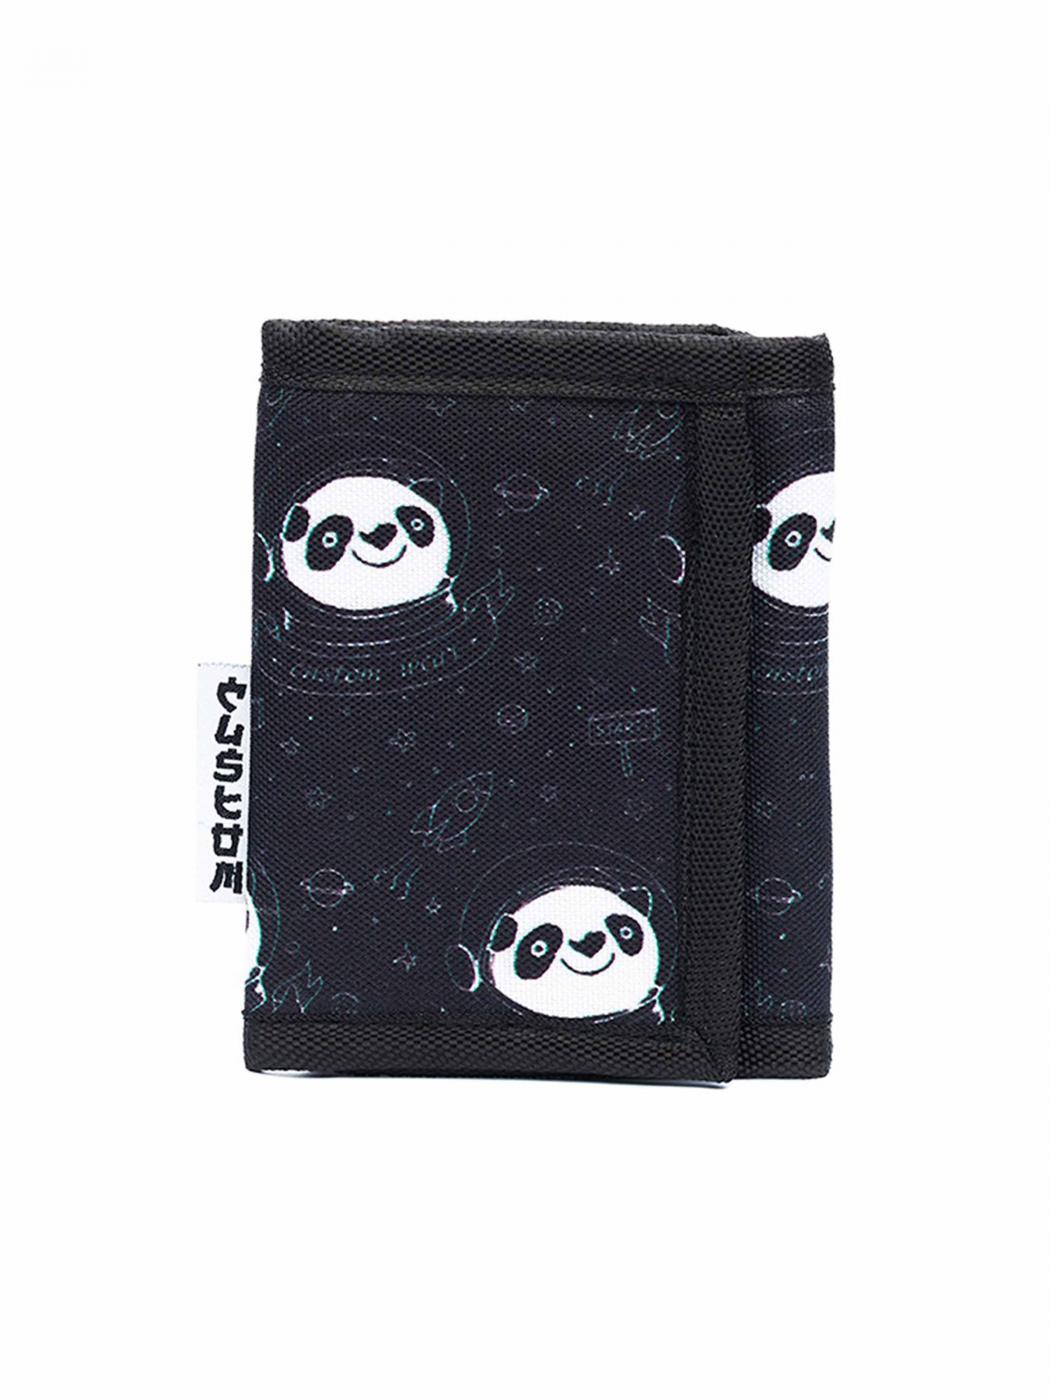 Гаманець Custom Wear Easy Space panda Black - Фото 4